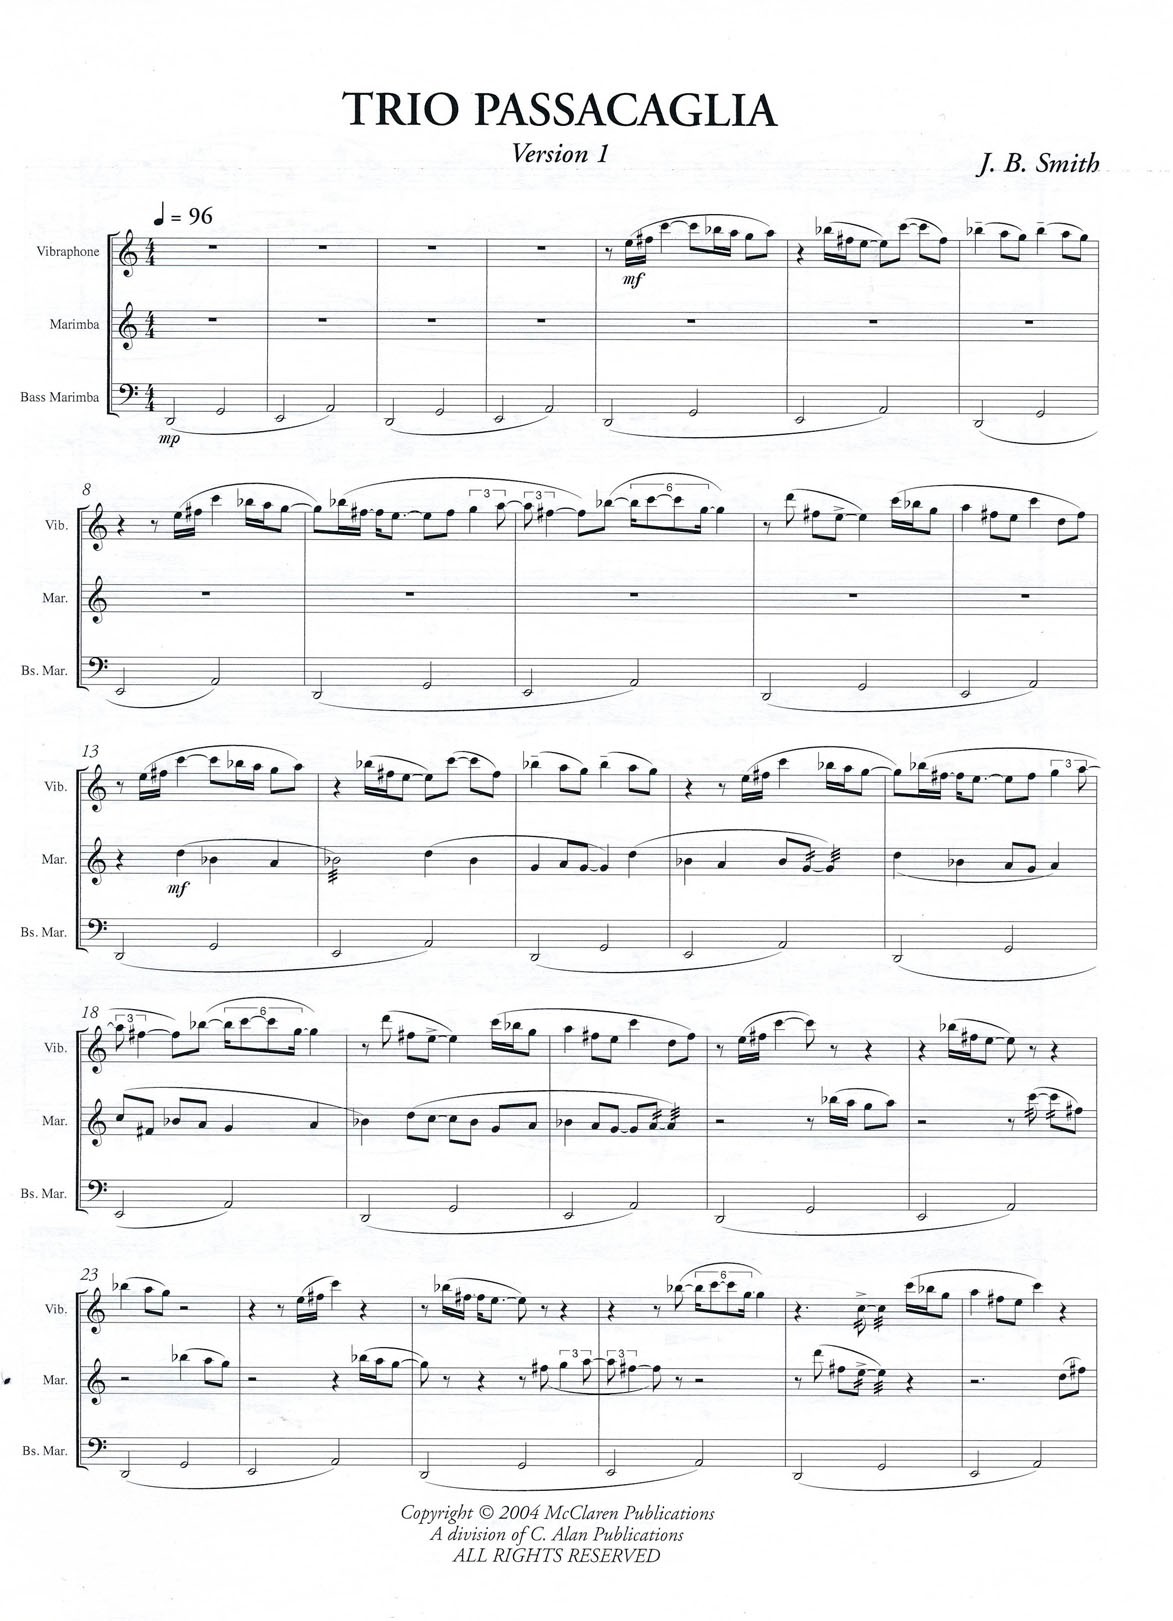 Trio Passacaglia (Version 1) by J B Smith